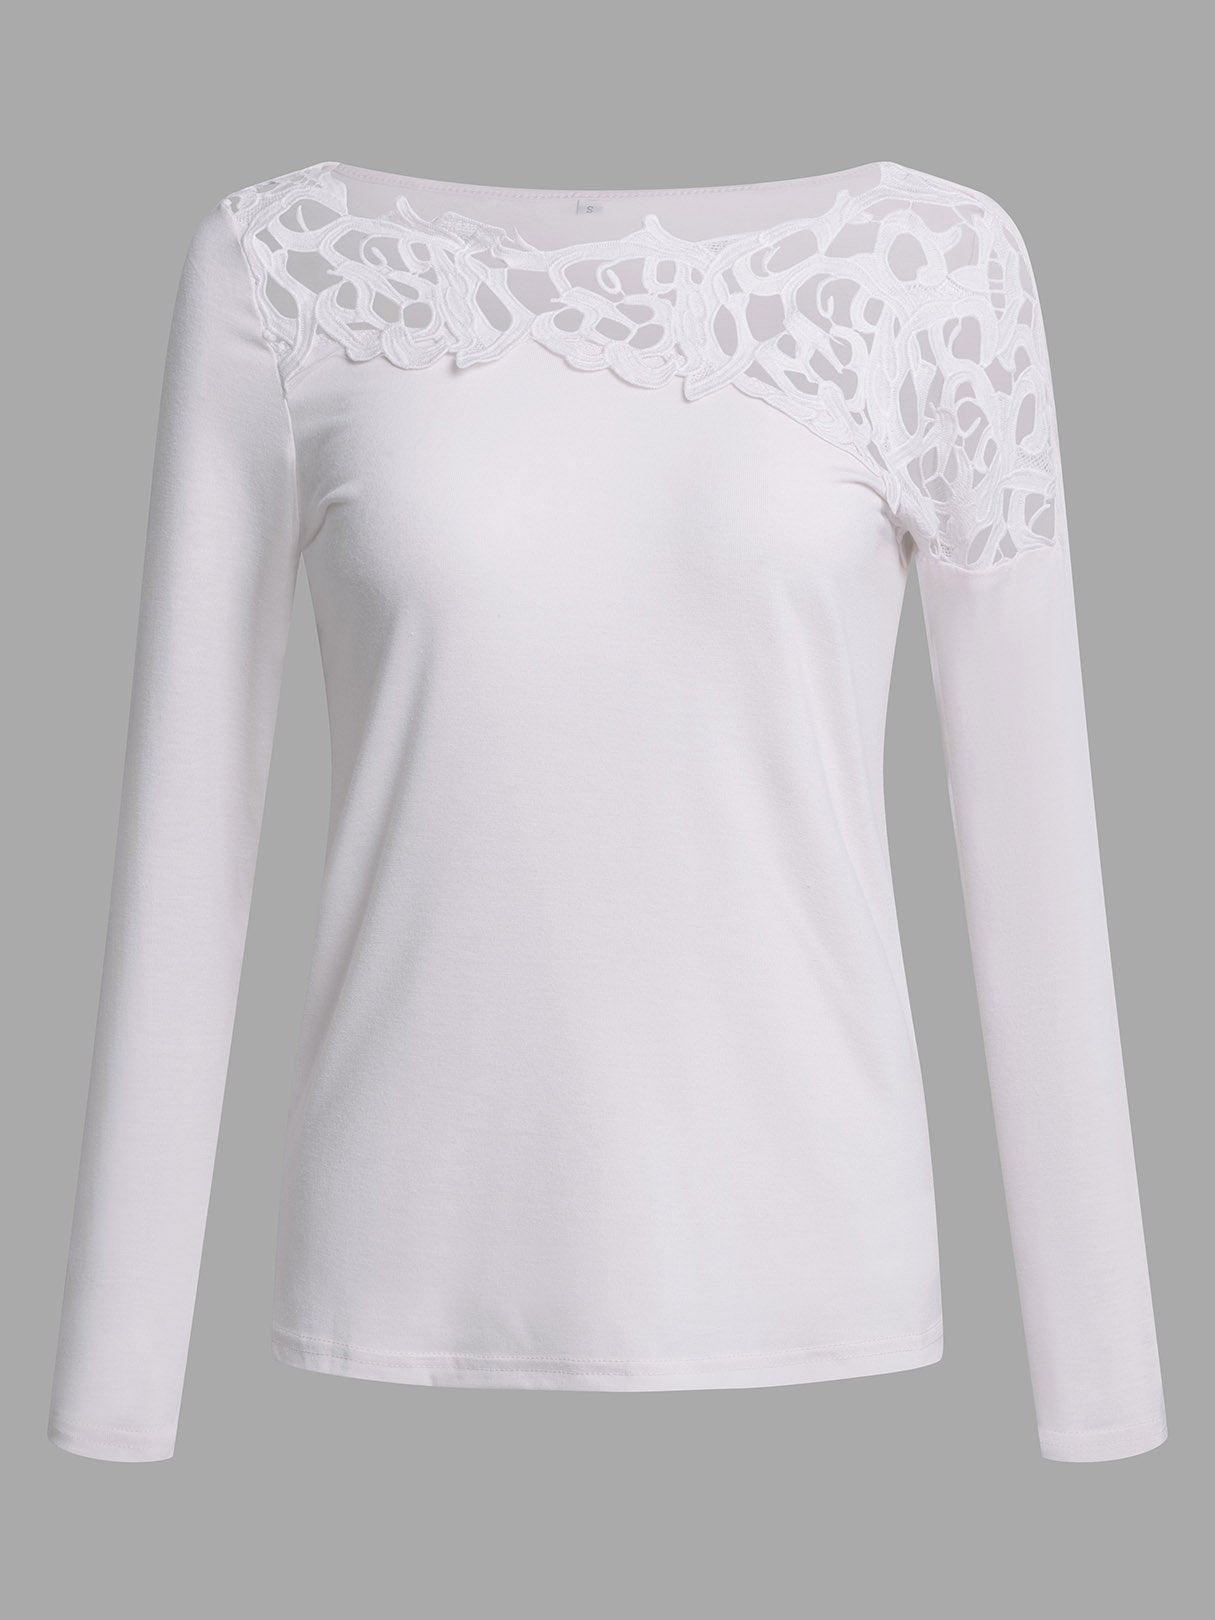 Wholesale Round Neck Plain Lace Hollow Cut Out Long Sleeve White T-Shirts